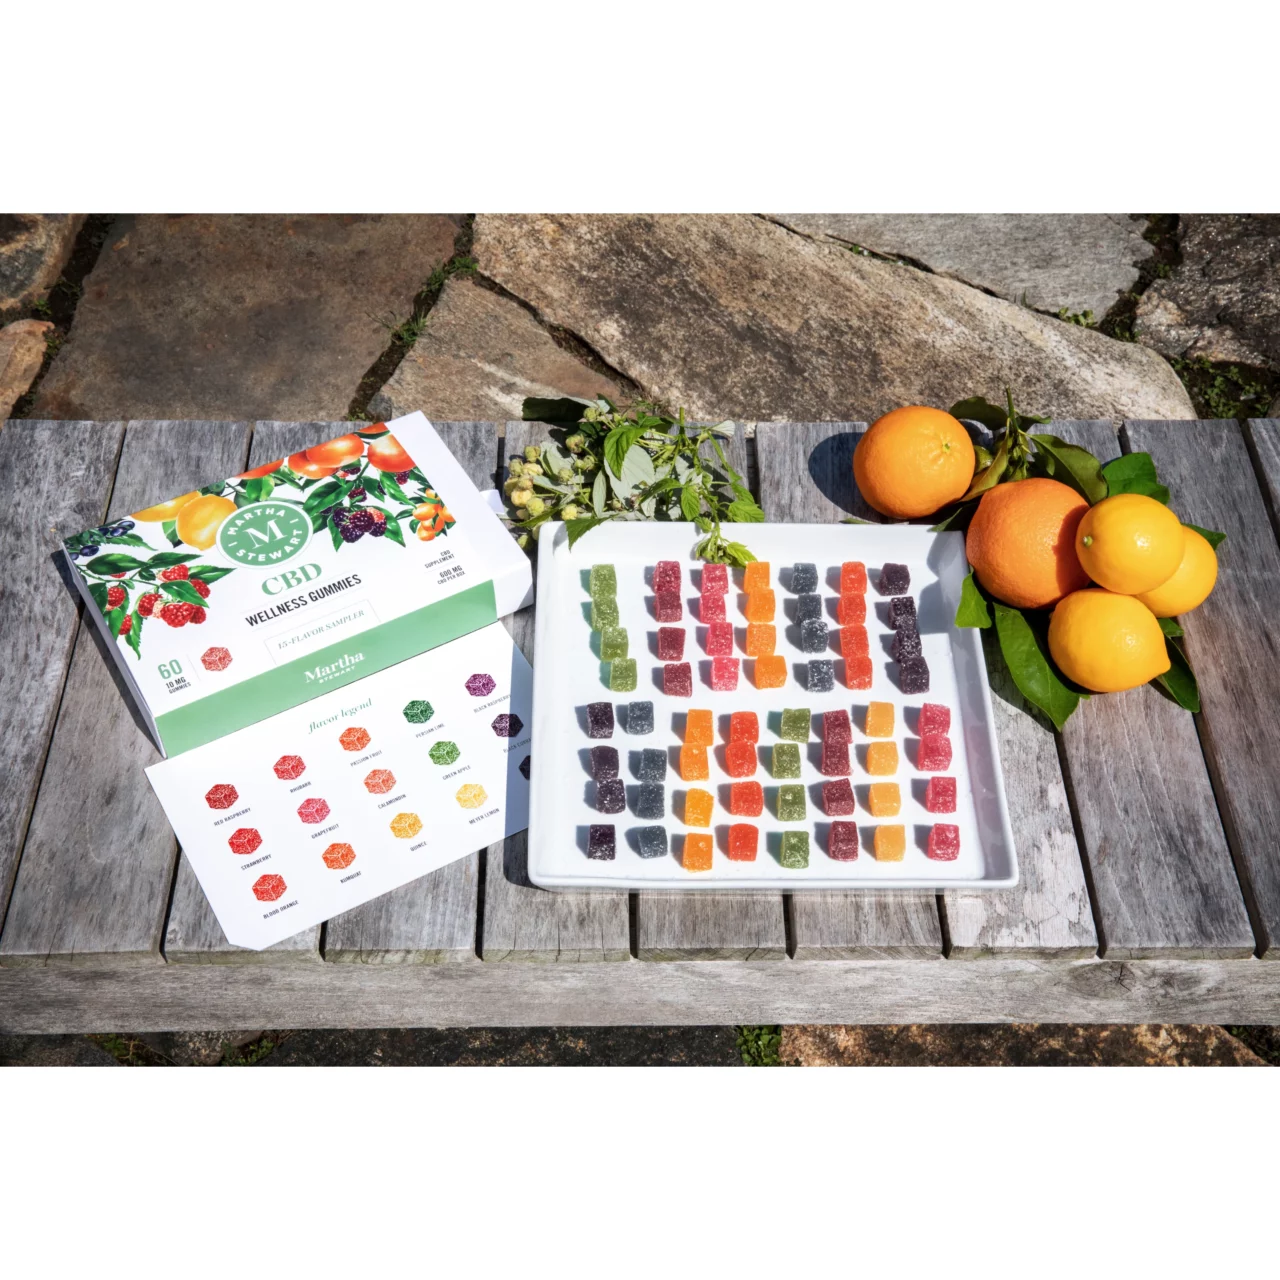 Martha Stewart CBD, 15 Flavor Sampler, Wellness Gummies, Isolate THC-Free, 60ct, 600mg CBD 1